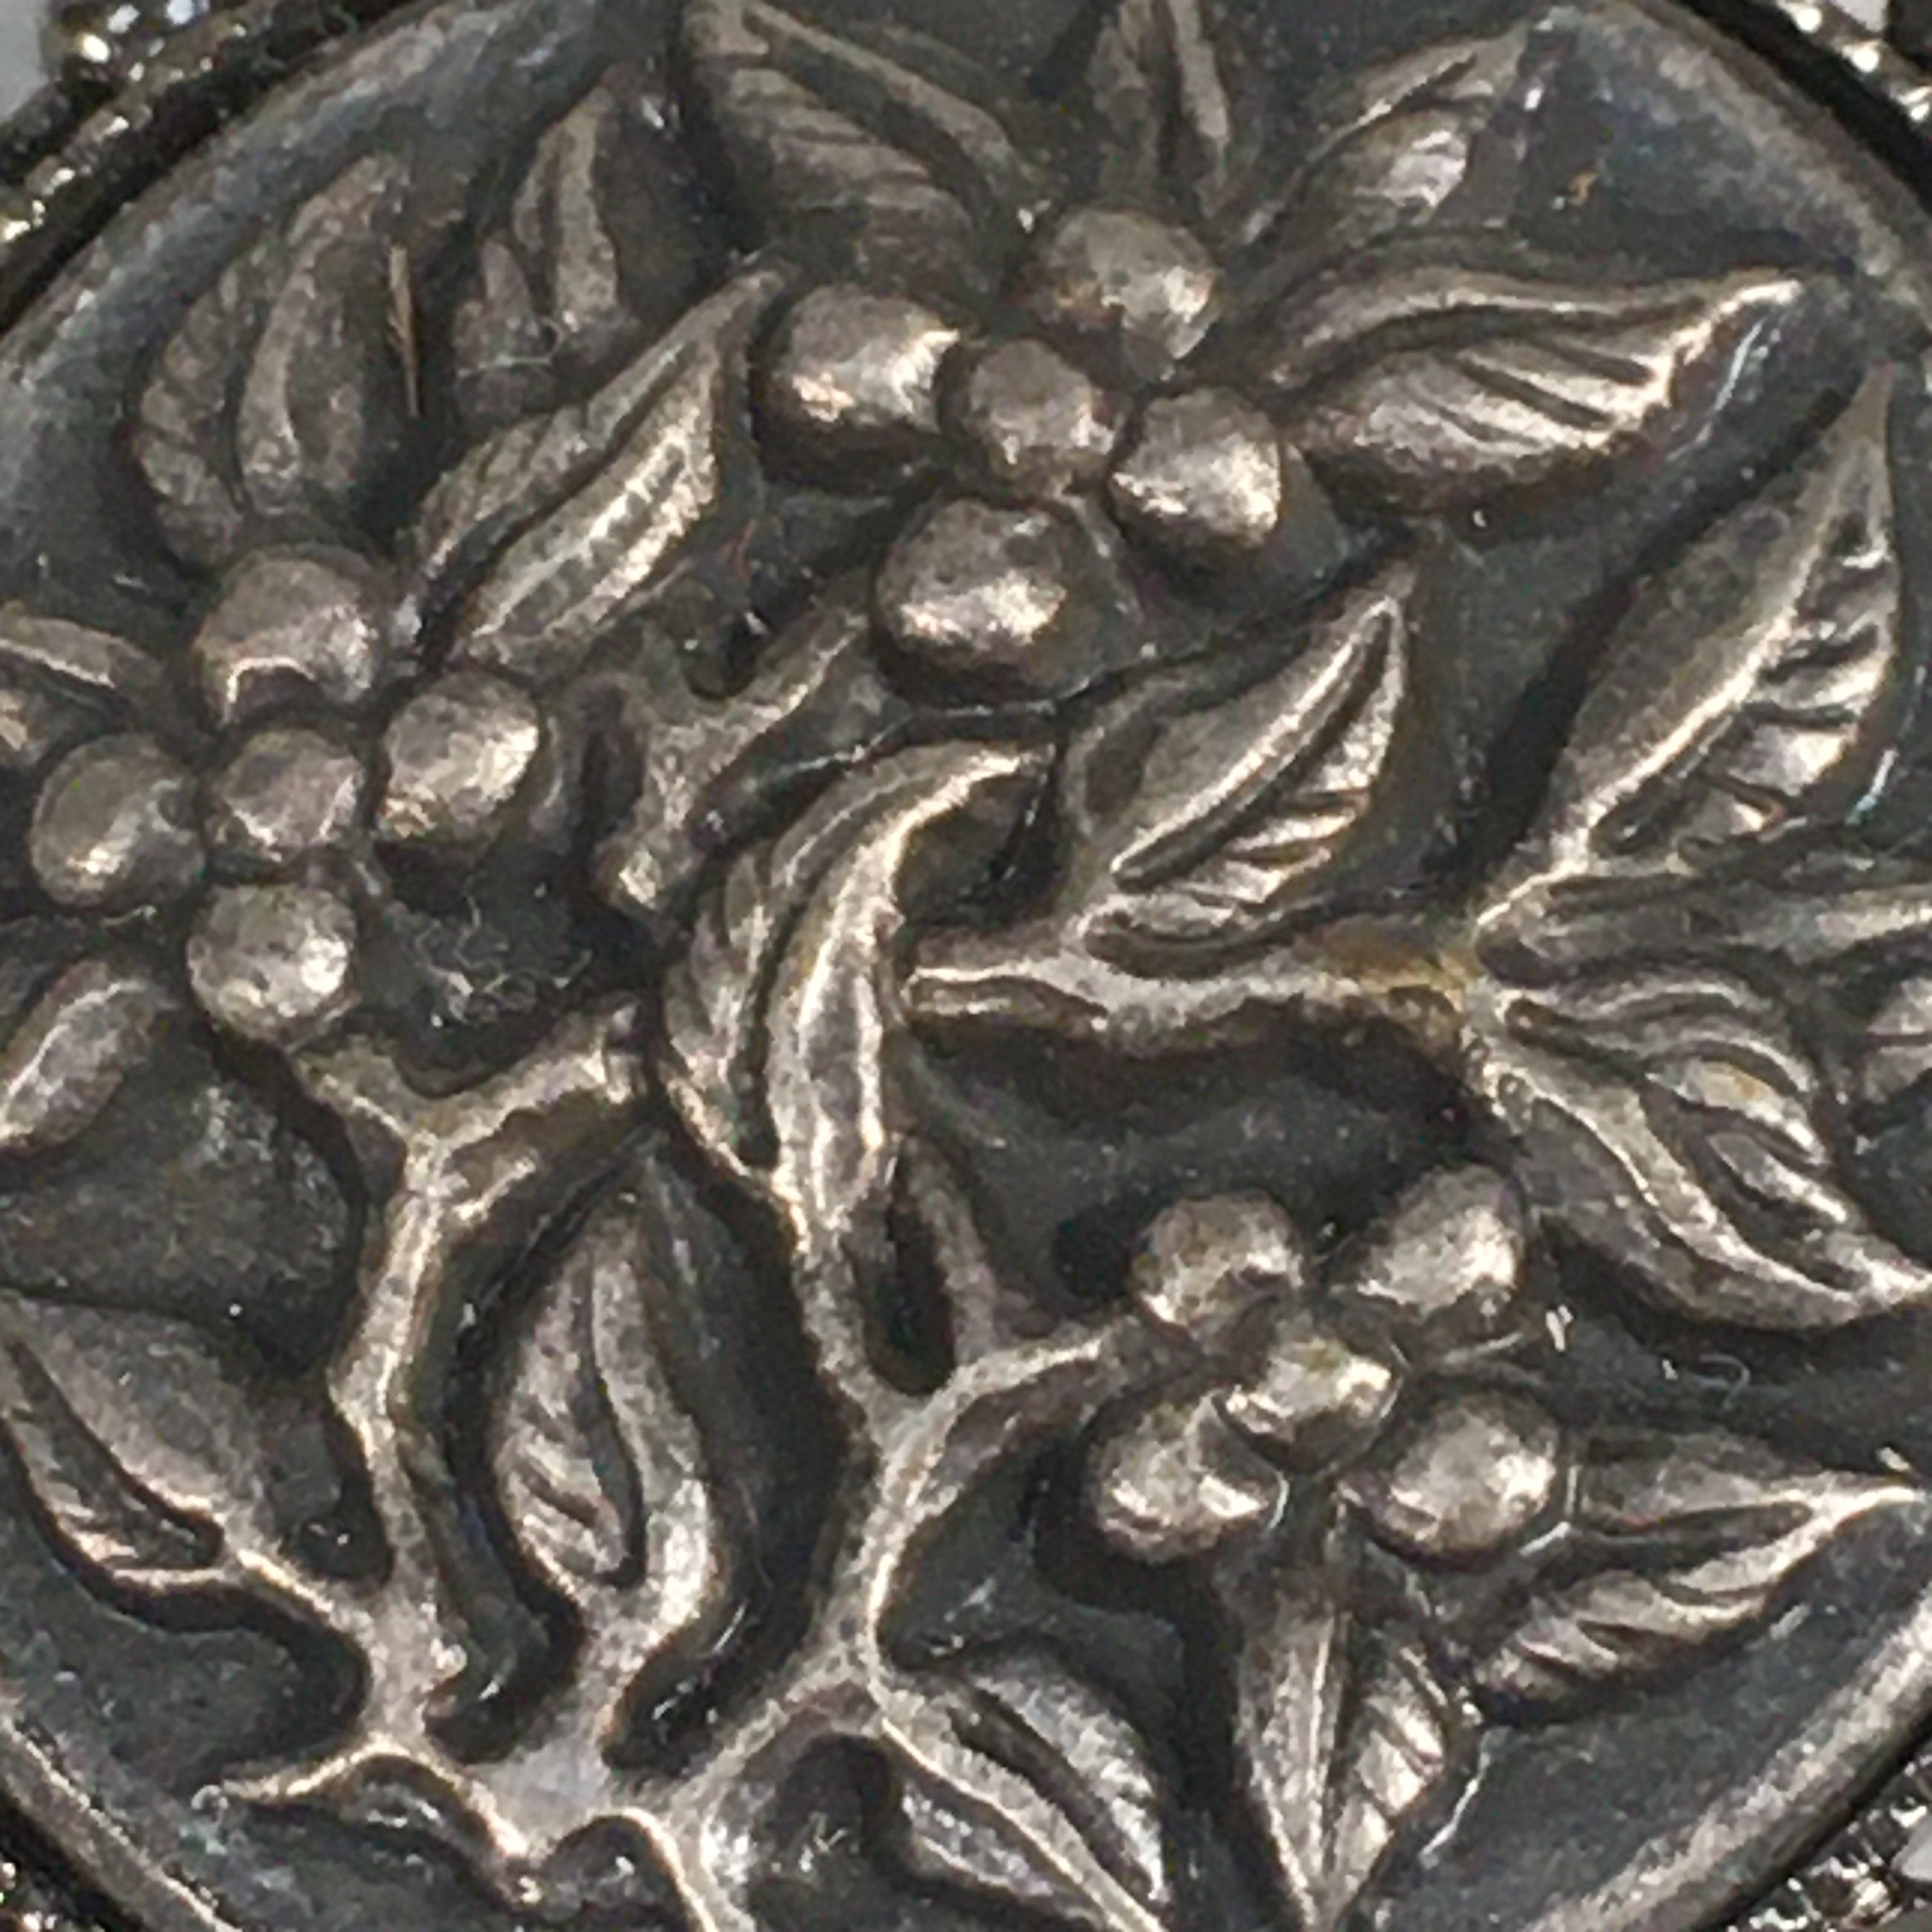 Japanese Metal Brooch Vtg Badge Pin Round Flower Frame Gray Silver JK94